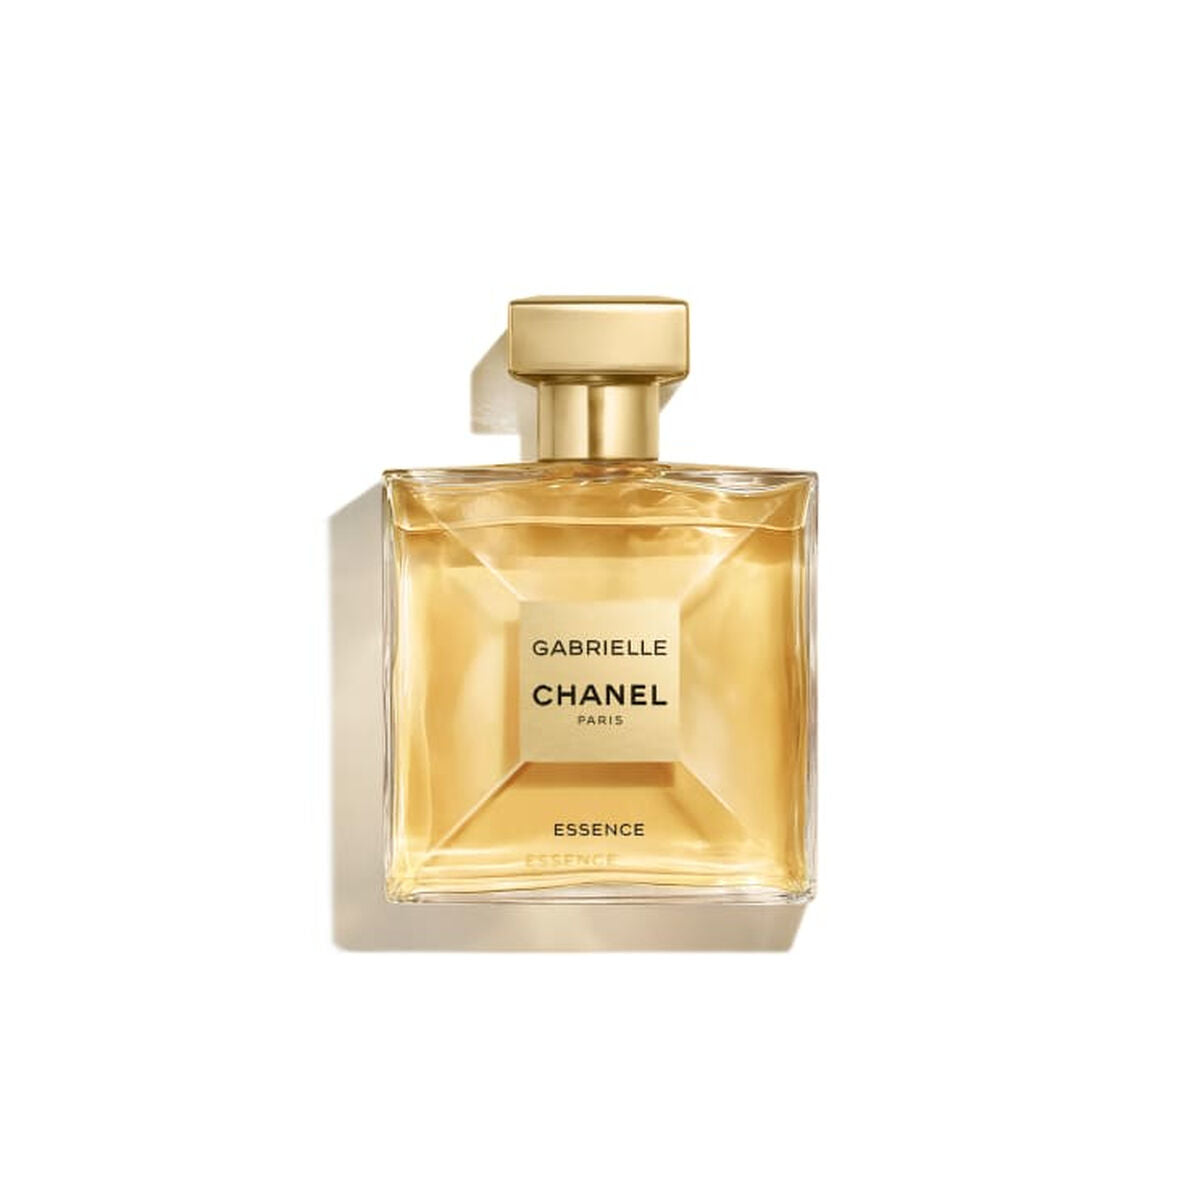 Kaufe Chanel Gabrielle Essence EDP 50 ml - Damen bei AWK Flagship um € 162.00